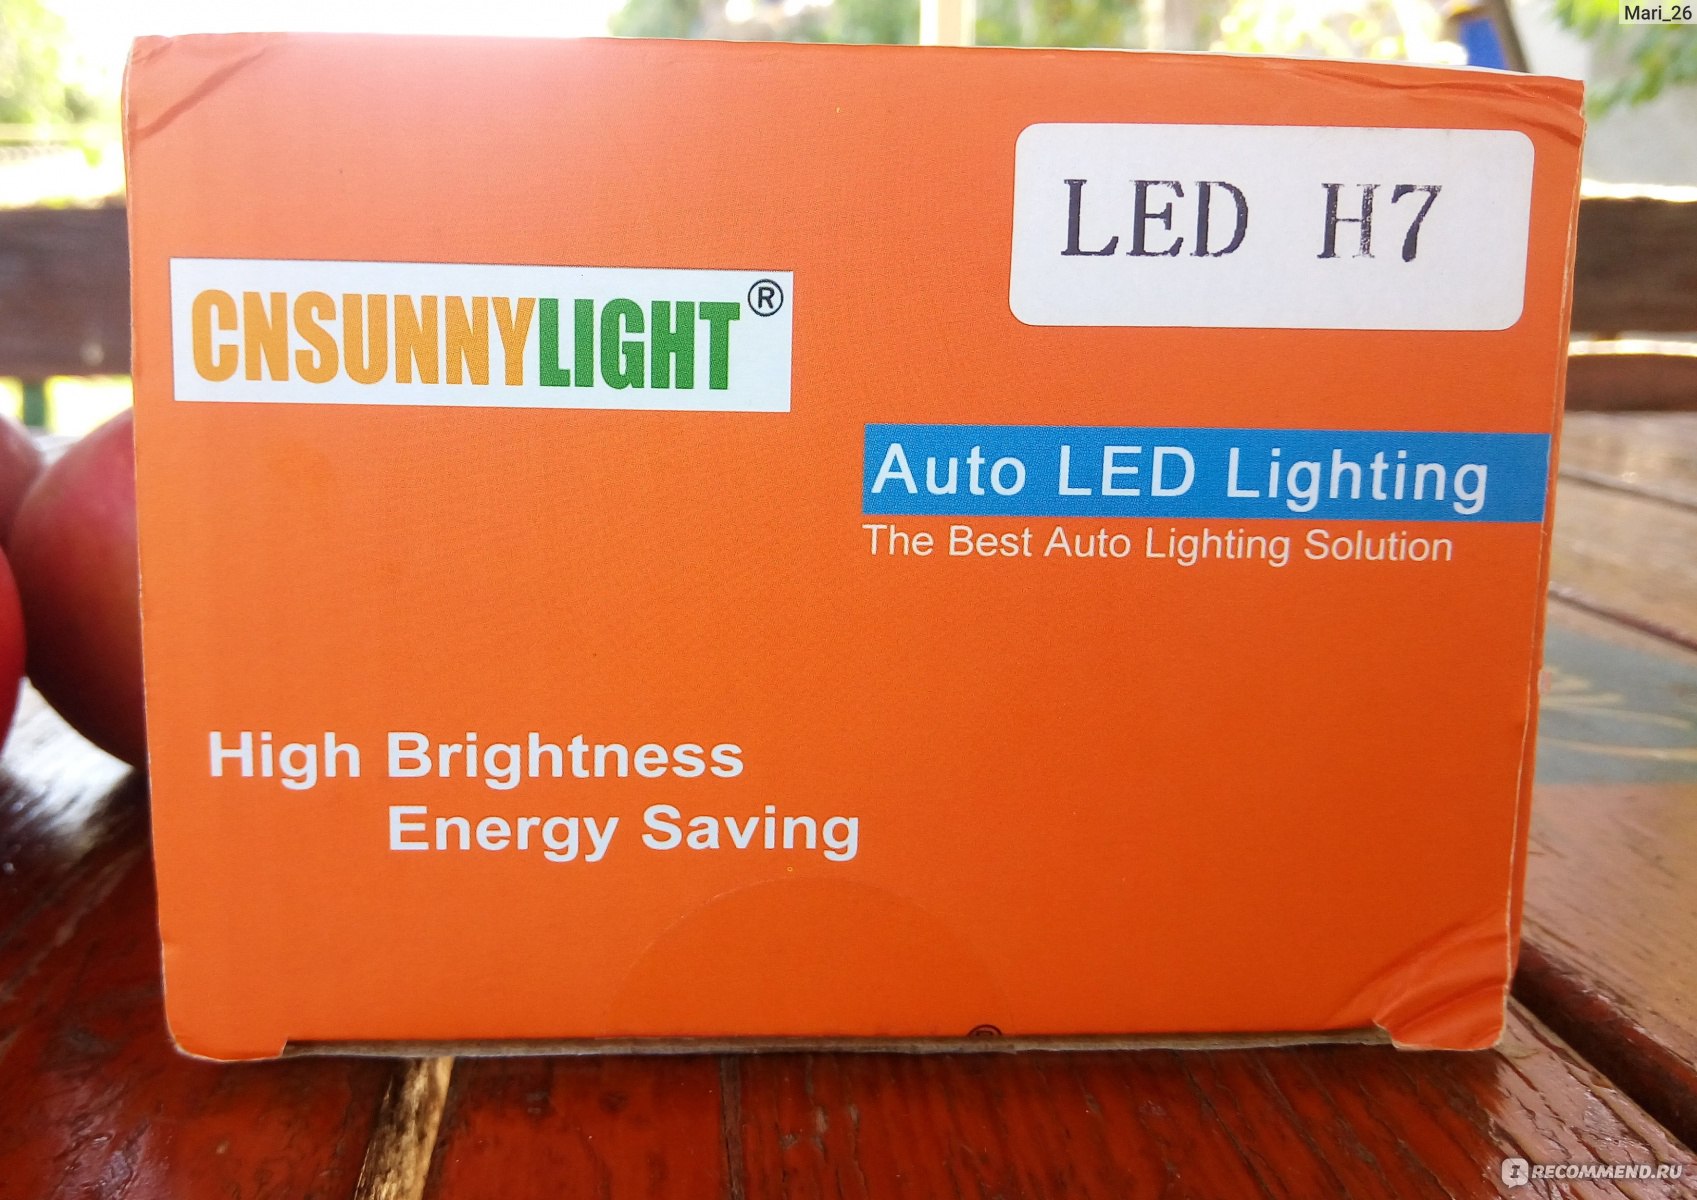 Автолампы Aliexpress CNSUNNYLIGHT R6 led H4 H7 H11 H1 H3 9005 9006/HB4 car headlight bulbs adjustable beam 60W 9000LM /pair 6000K auto light 12V 24V фото